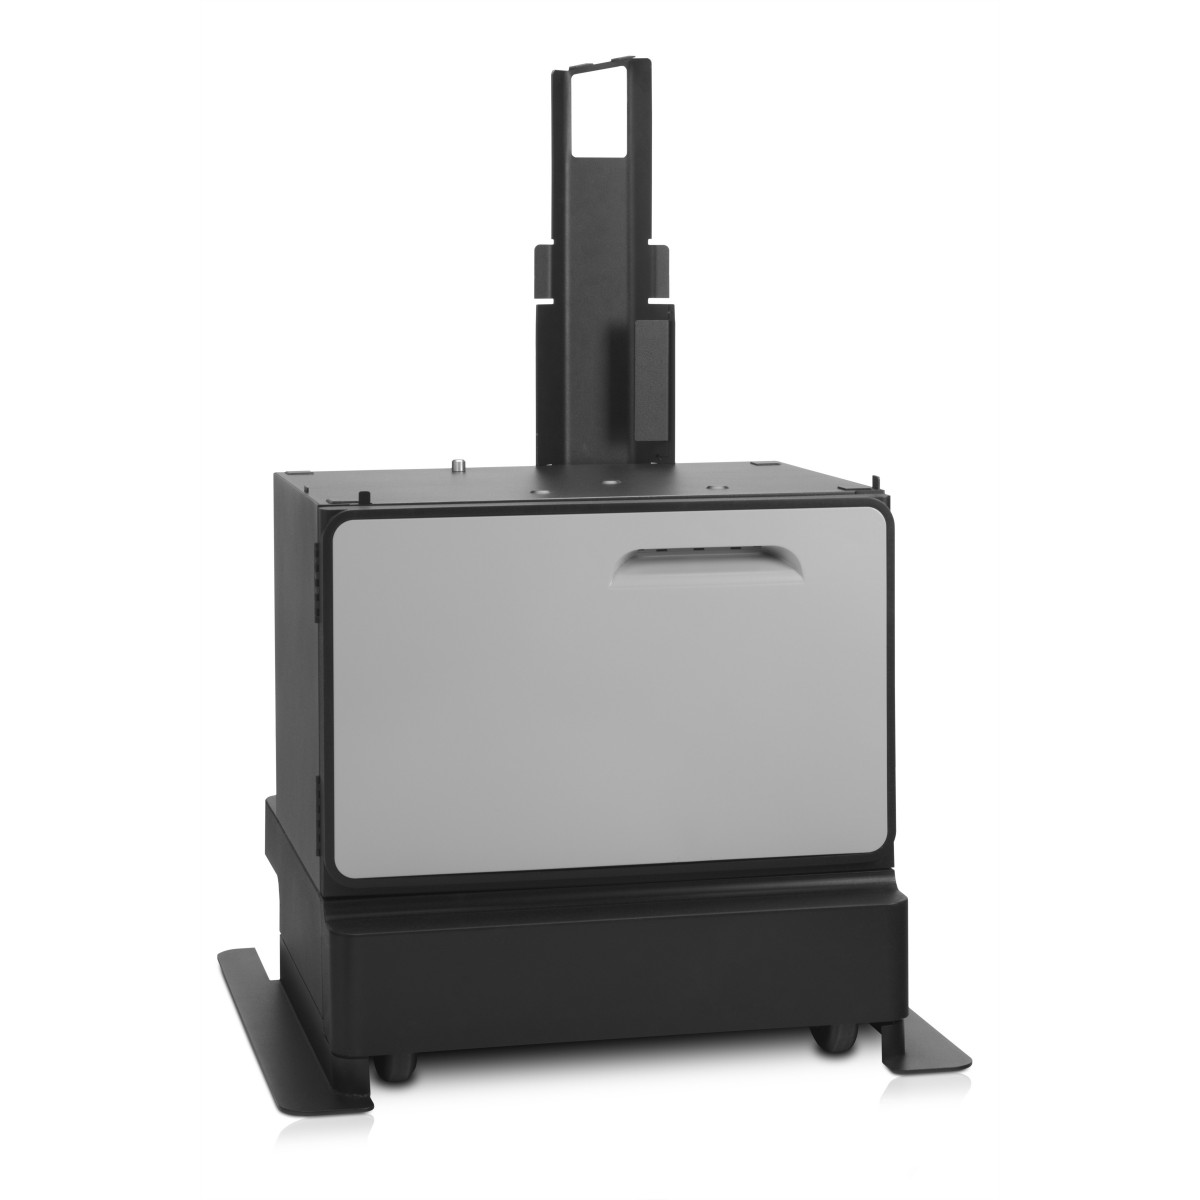 HP Officejet Enterprise Printer Cabinet and Stand - Black - Grey - HP B5L06A - C2S11A - C2S12A - B5L04A - B5L05A - 640 mm - 705 